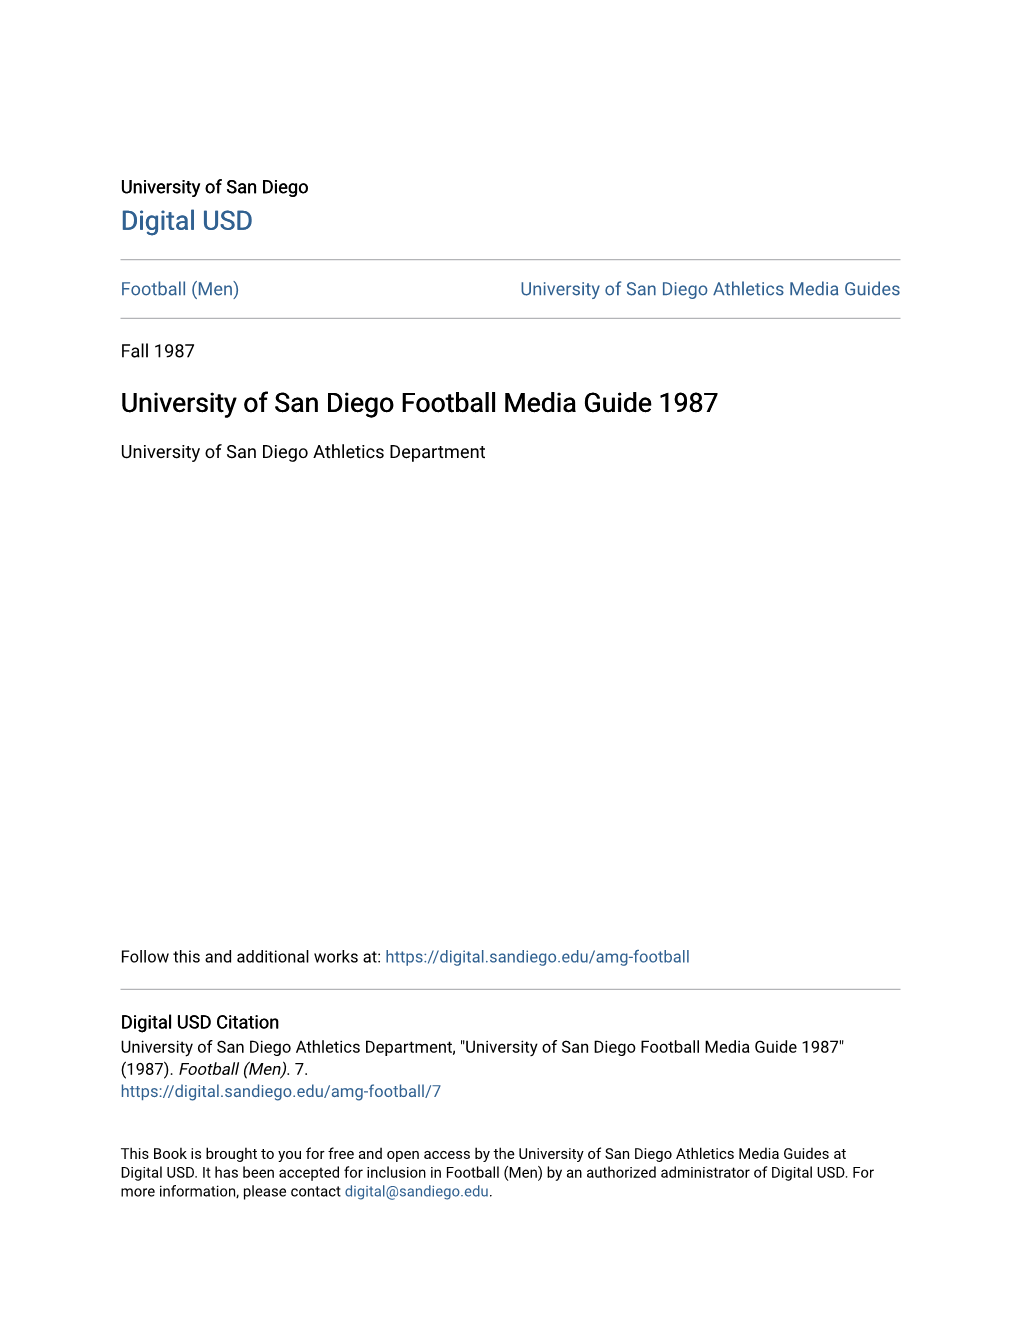 University of San Diego Football Media Guide 1987